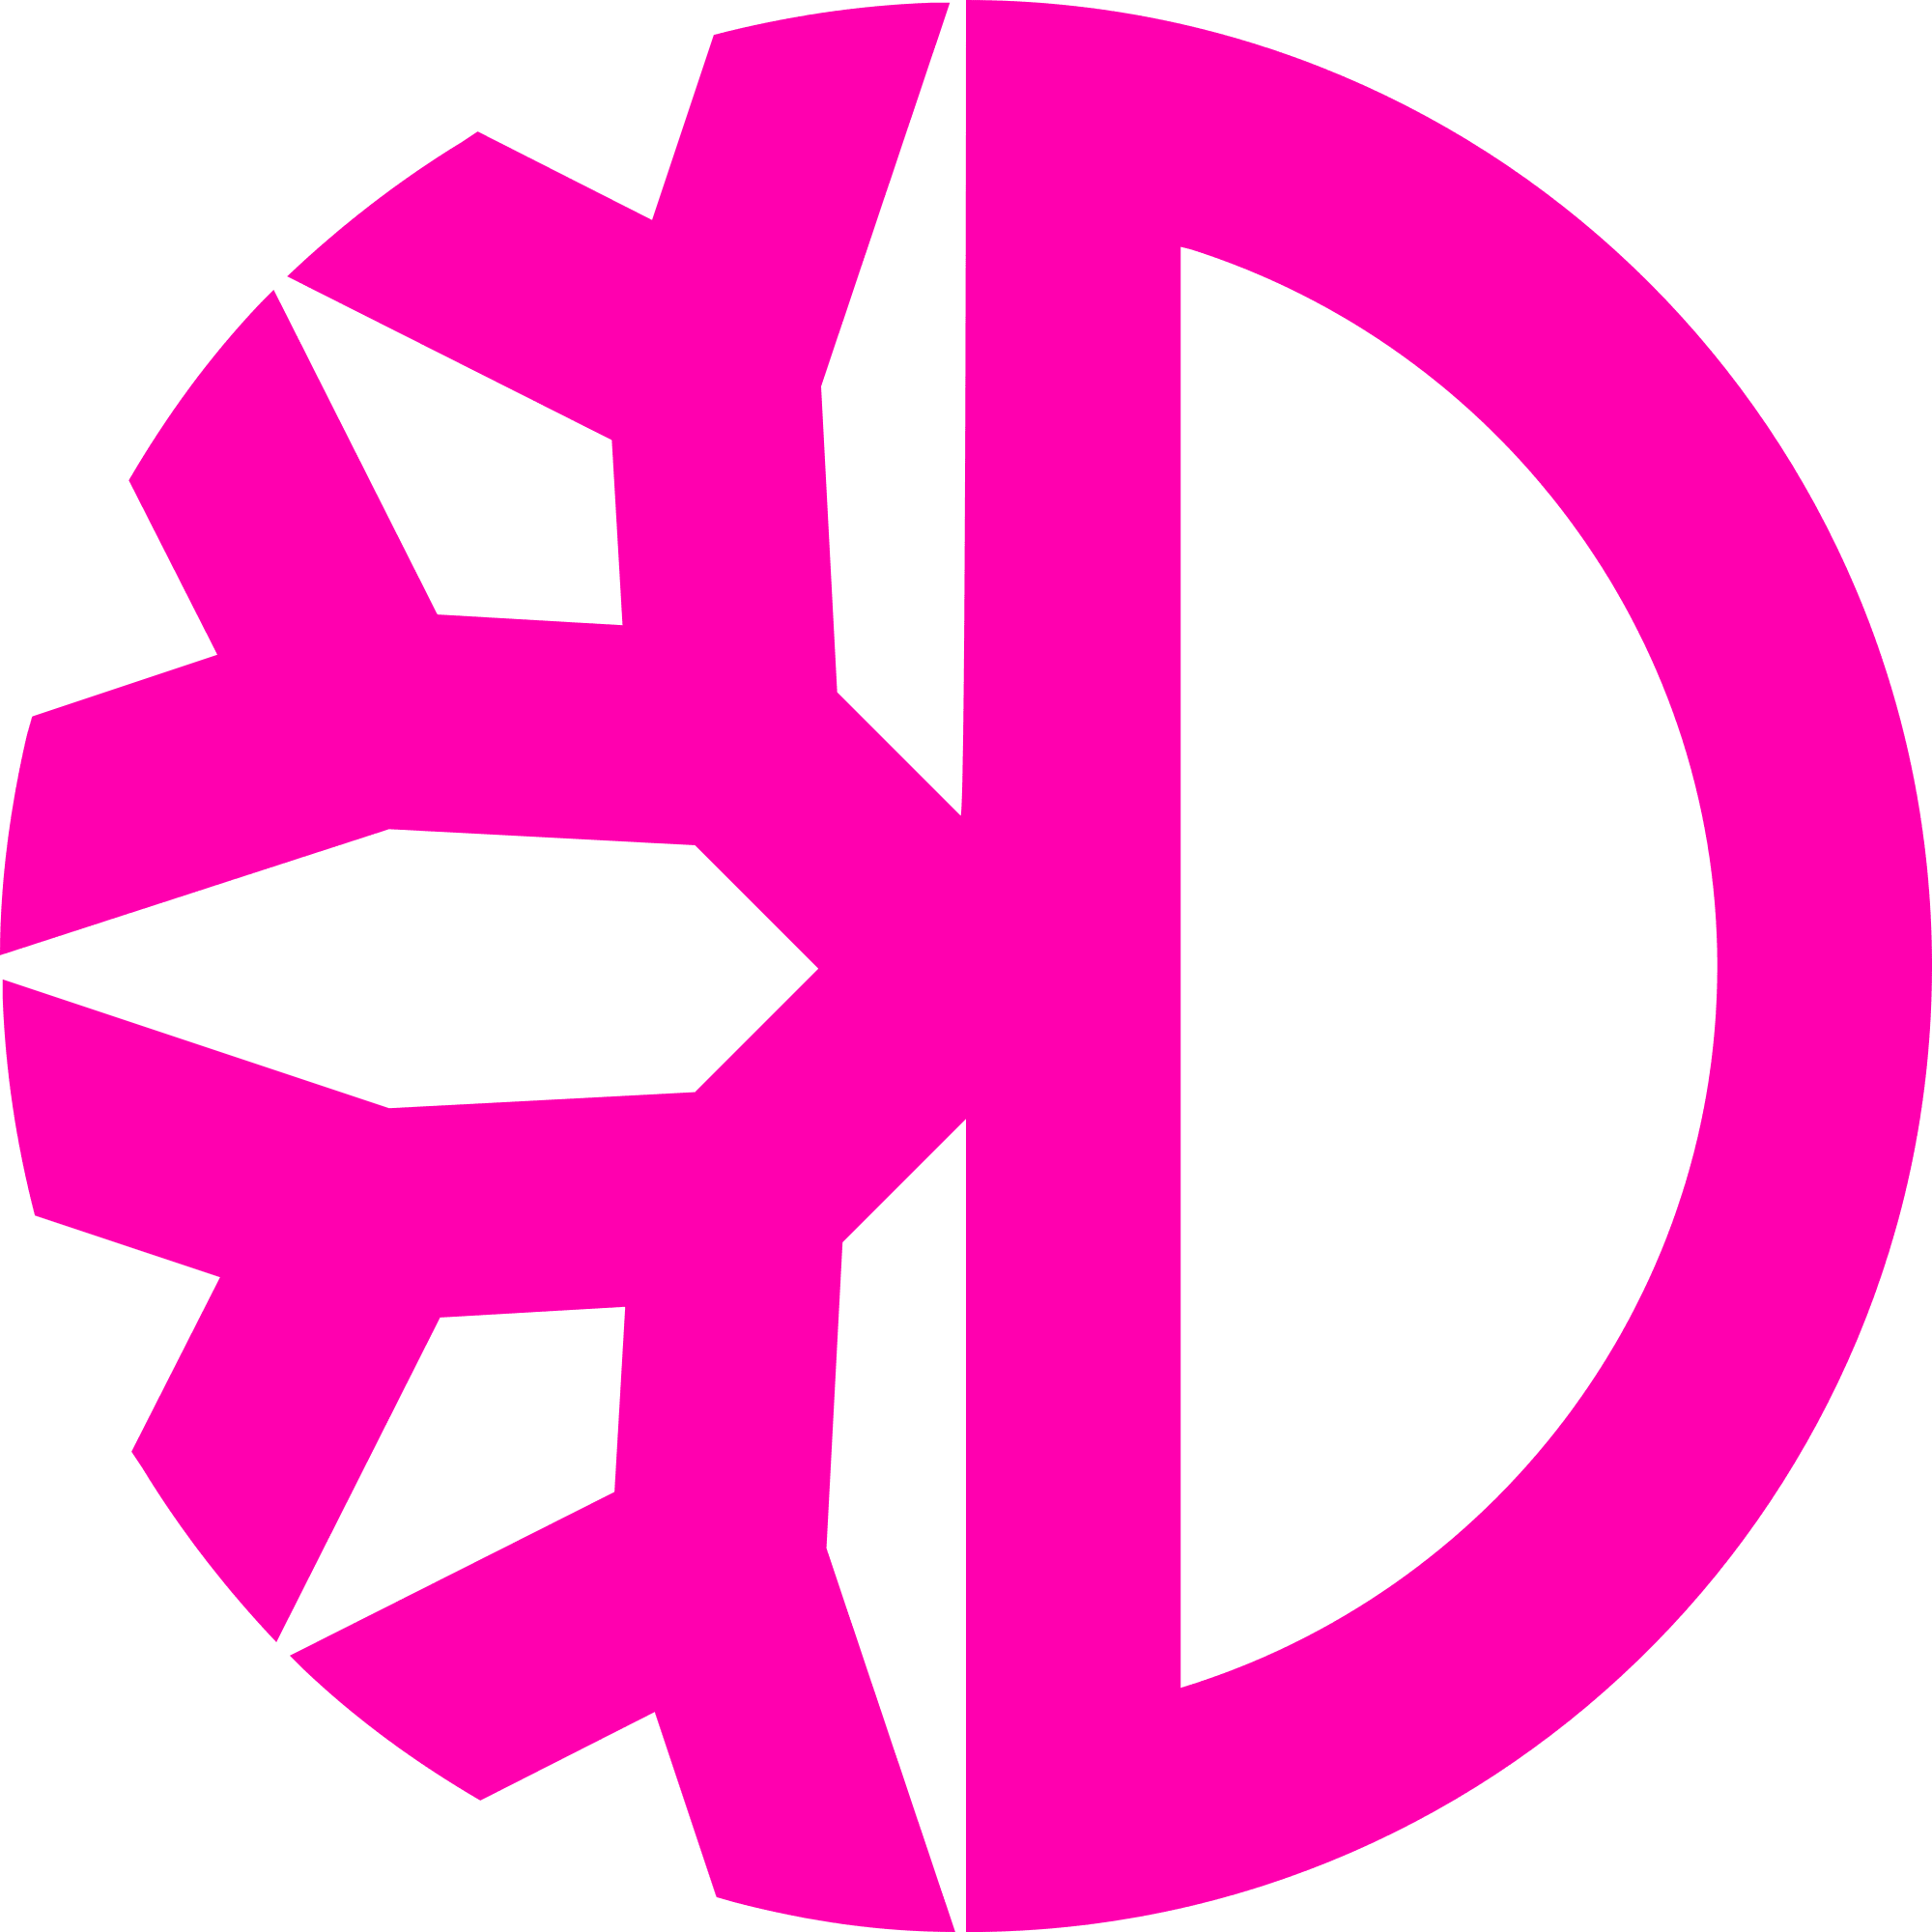 DeFiChain logo in png format